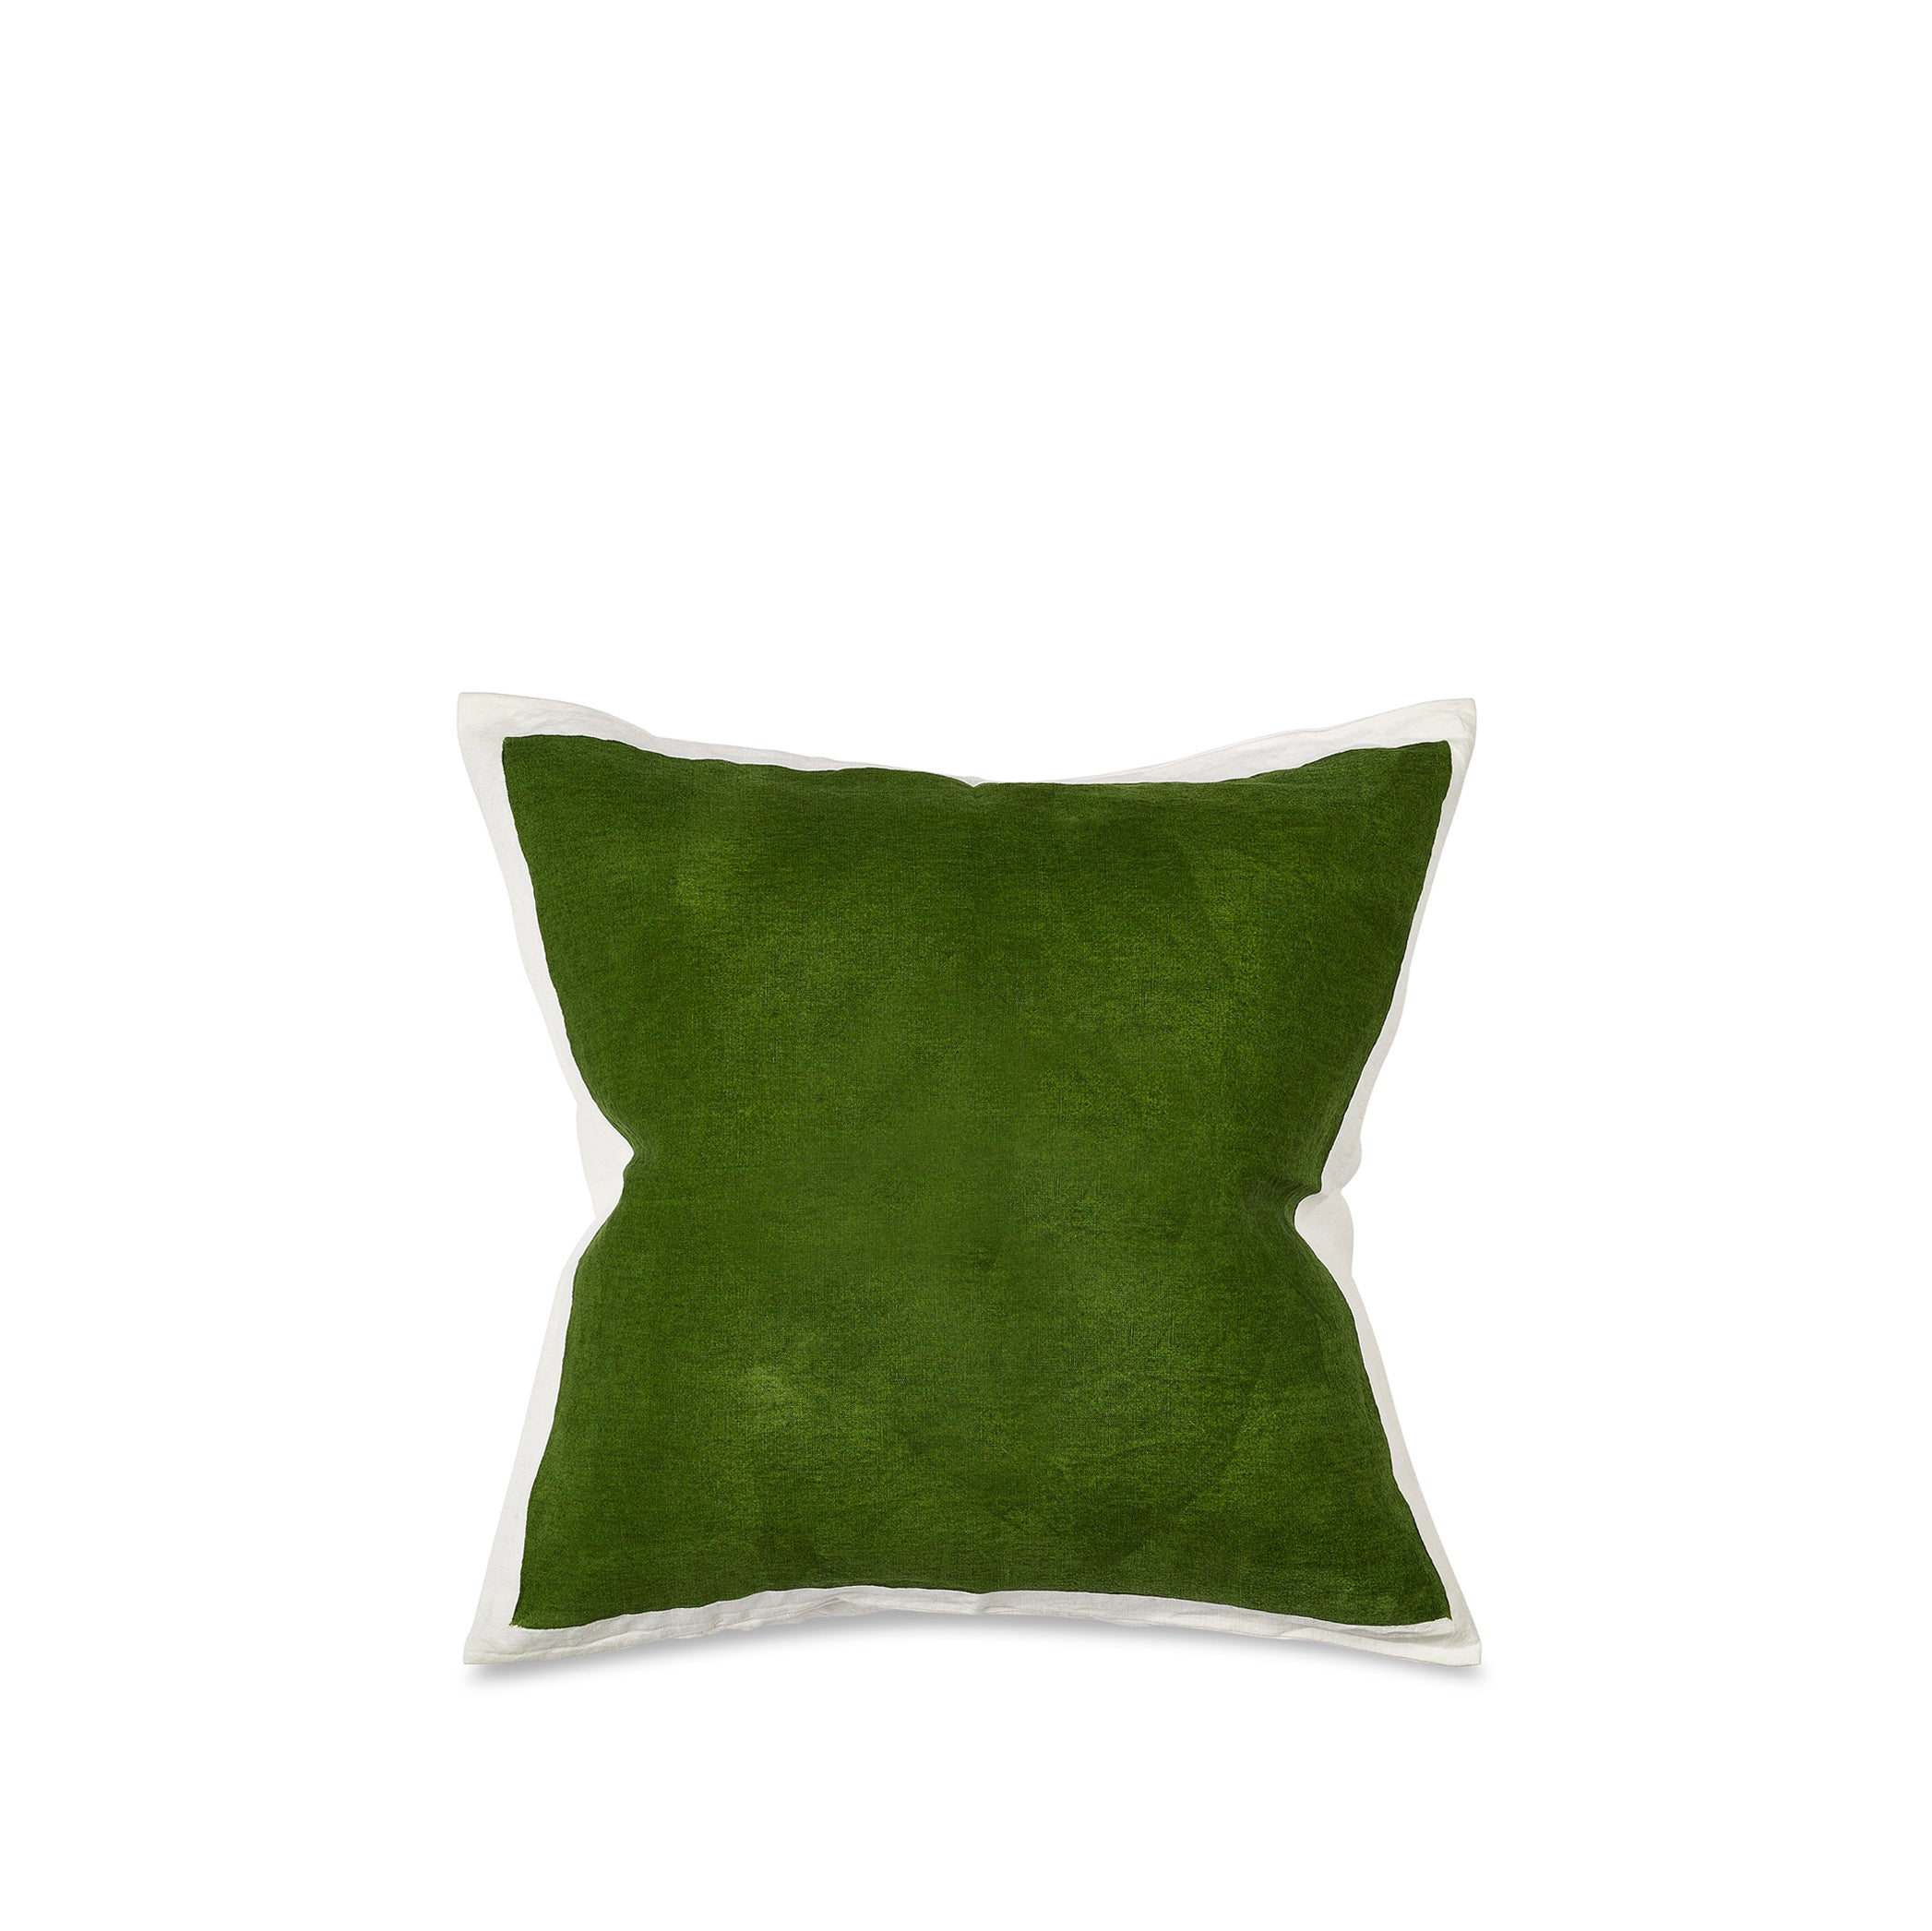 Hand Painted Linen Cushion in Avocado Green, 50cm x 50cm